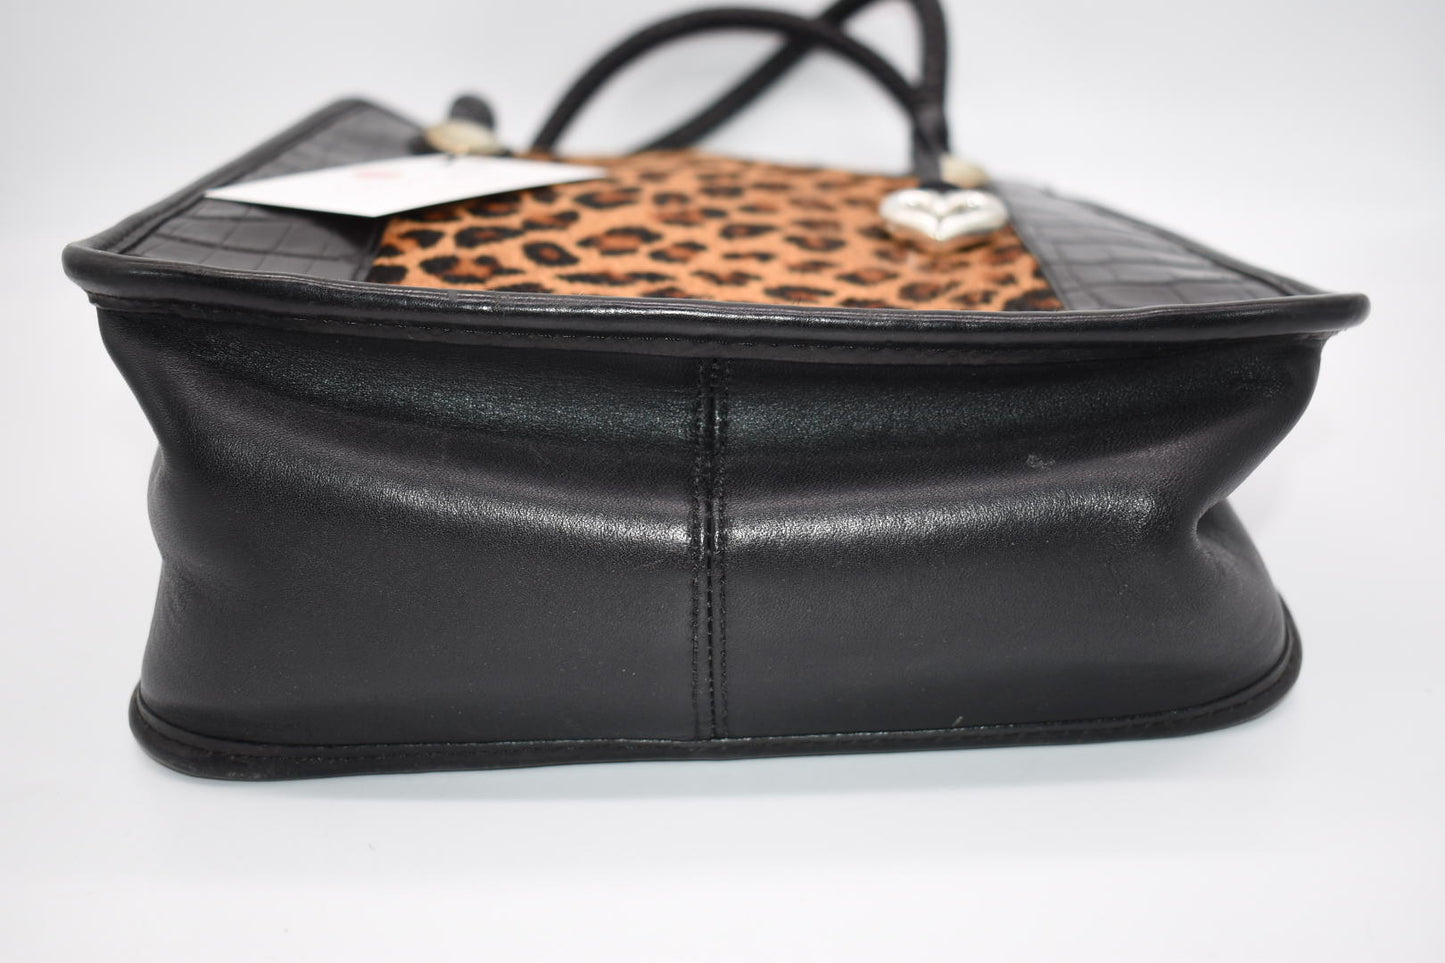 Vintage Brighton Leather & Cheetah Tote Bag